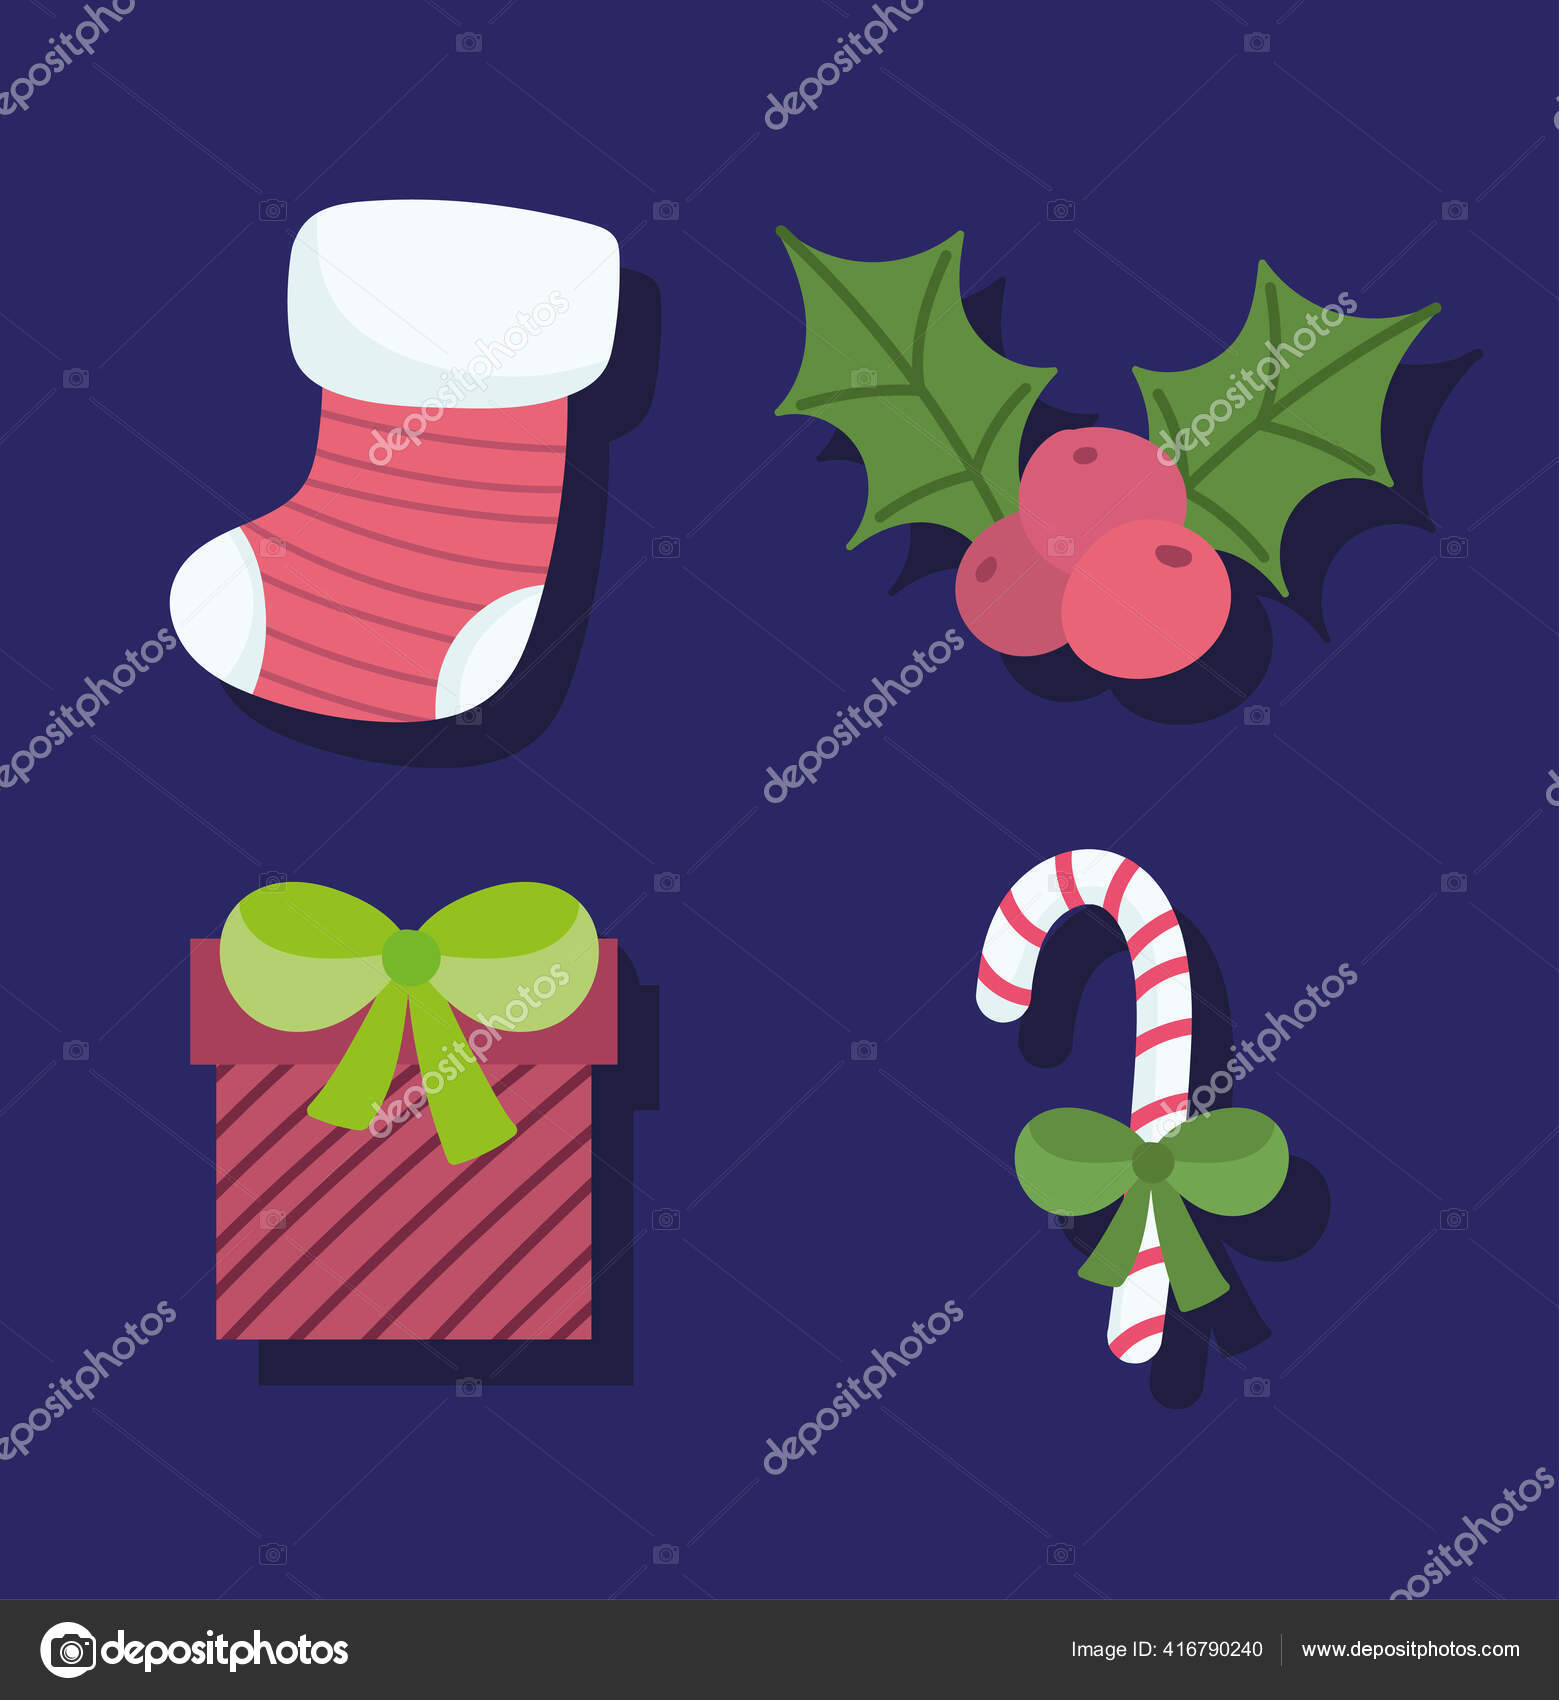 ost Slagter Arabiske Sarabo Glædelig jul, strømpe gave slik stok og kristtjørn bær ikoner mørk baggrund  — Stock-vektor © stockgiu #416790240